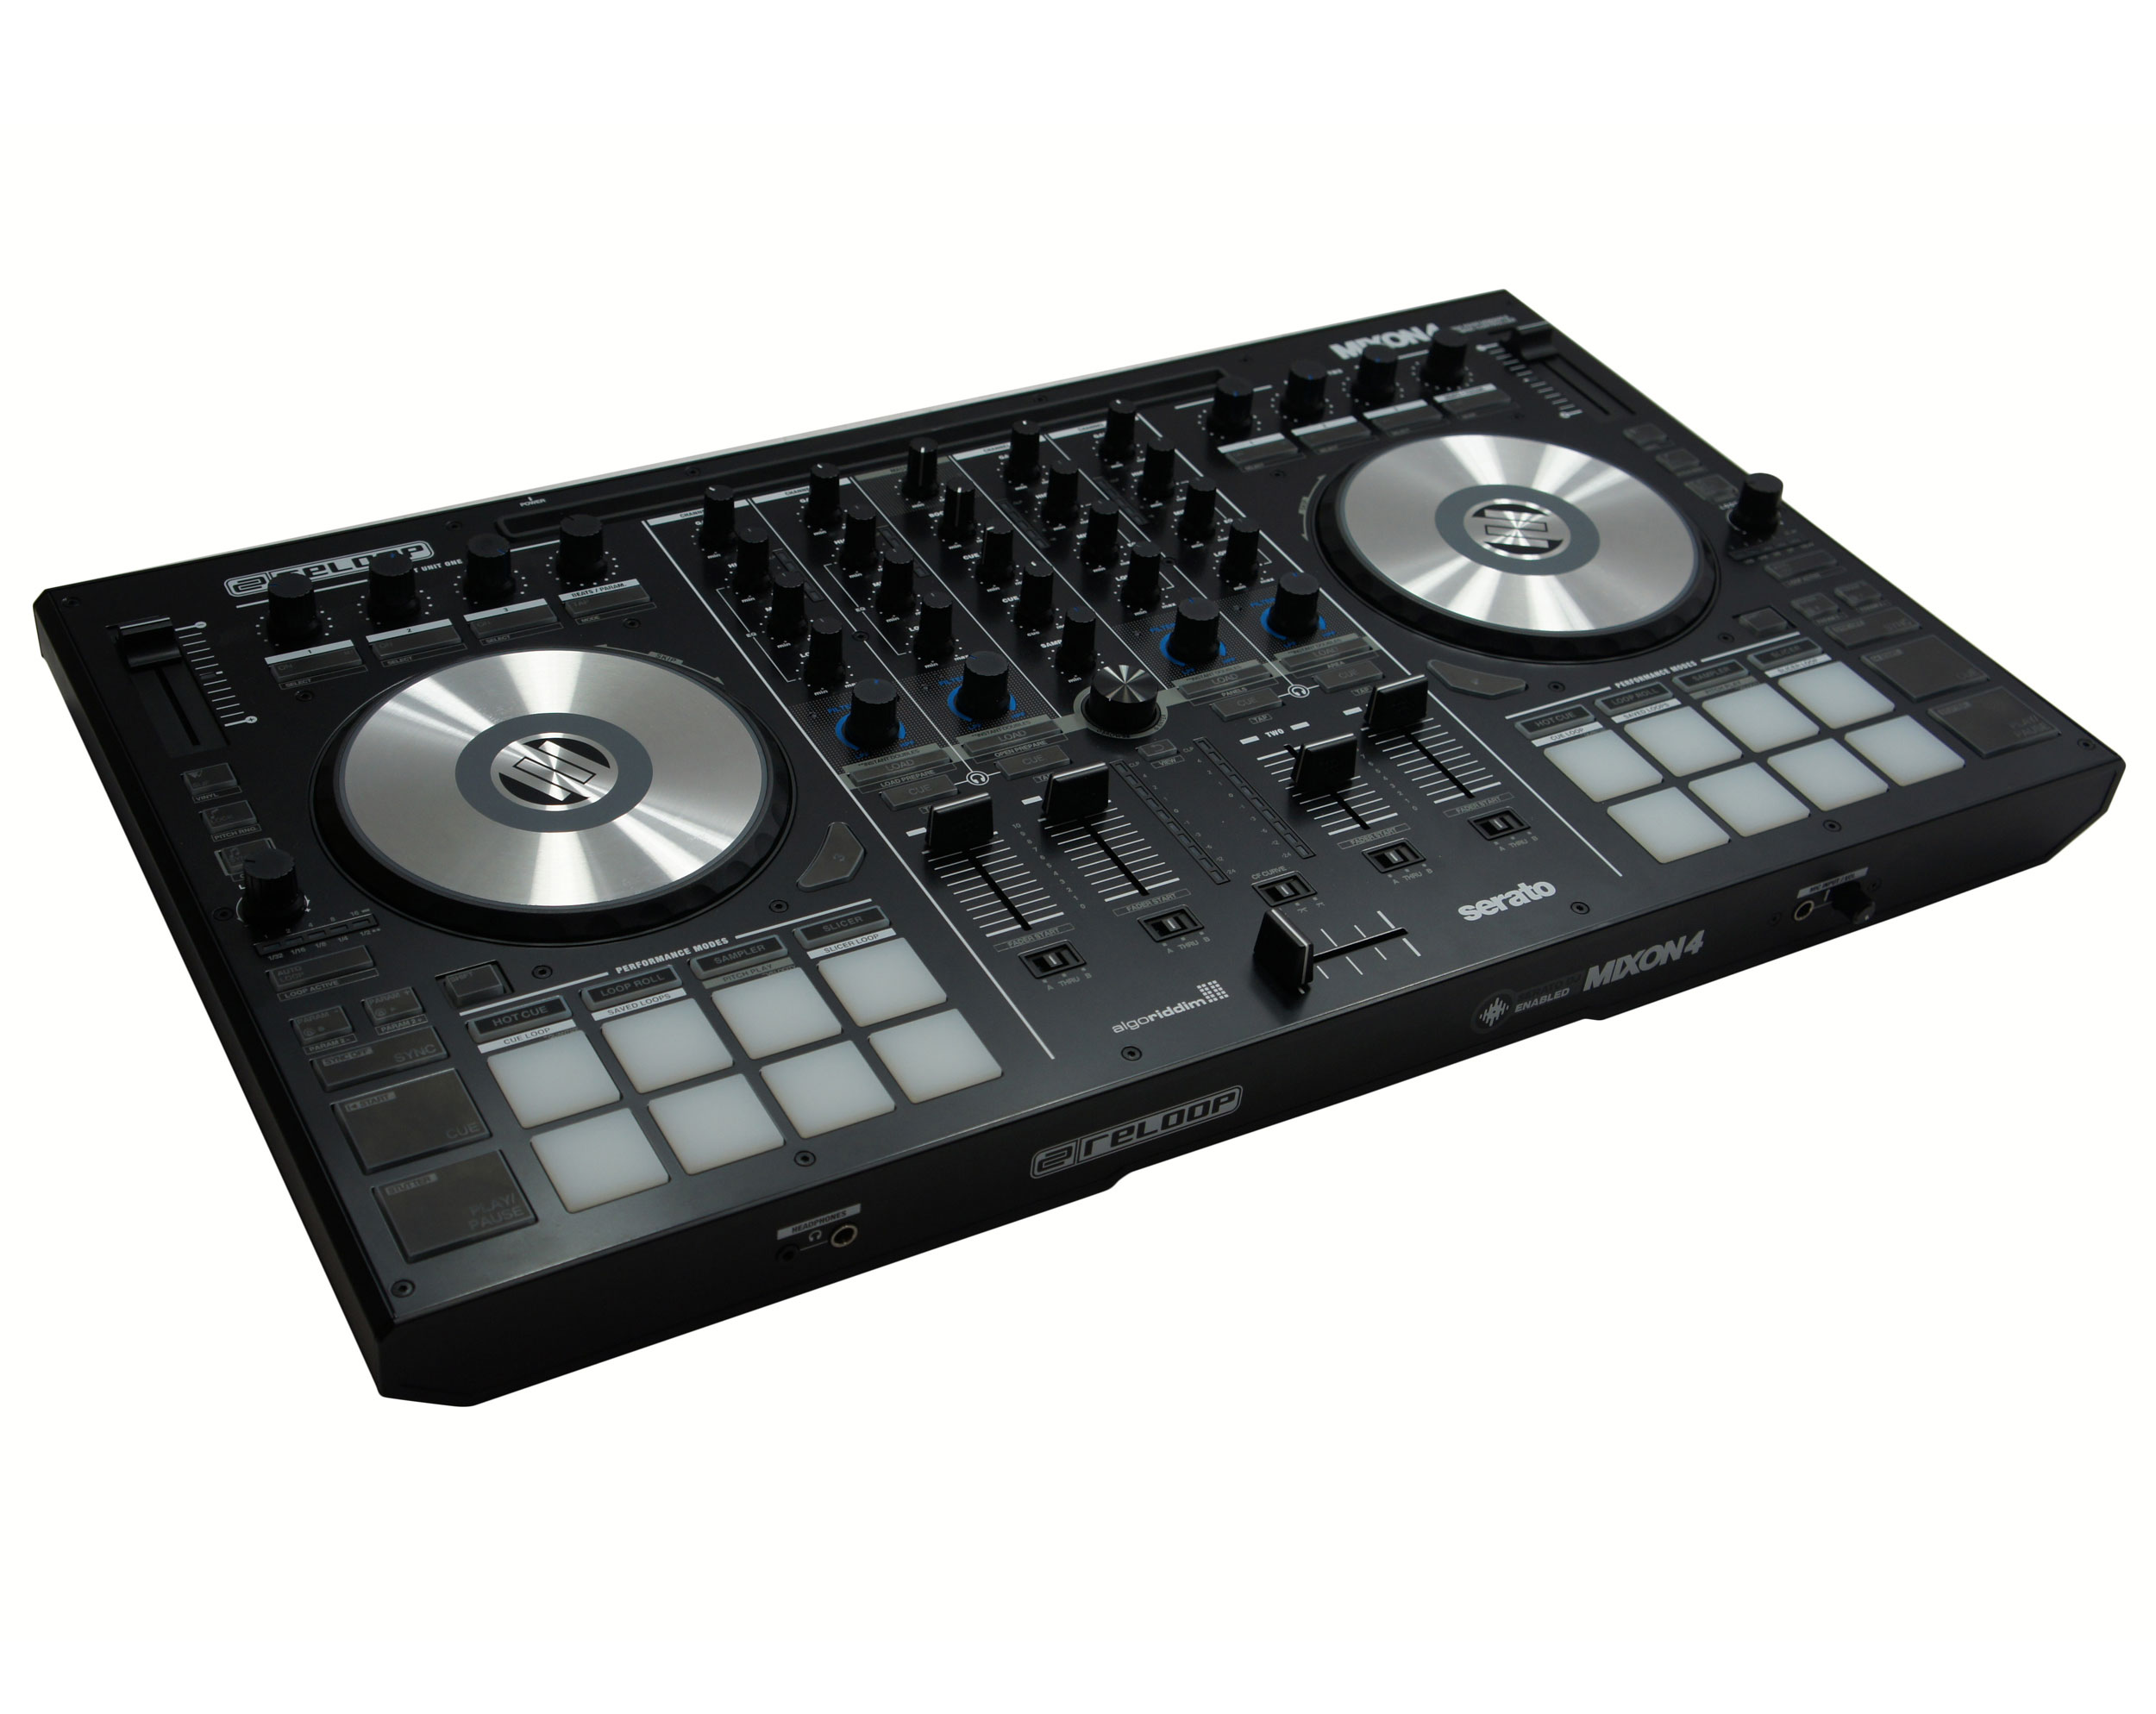 Reloop Mixon 4 DJ 4 Channel Deck Hybrid Controller for Serato - Like New - DEMO19-MIXON-4